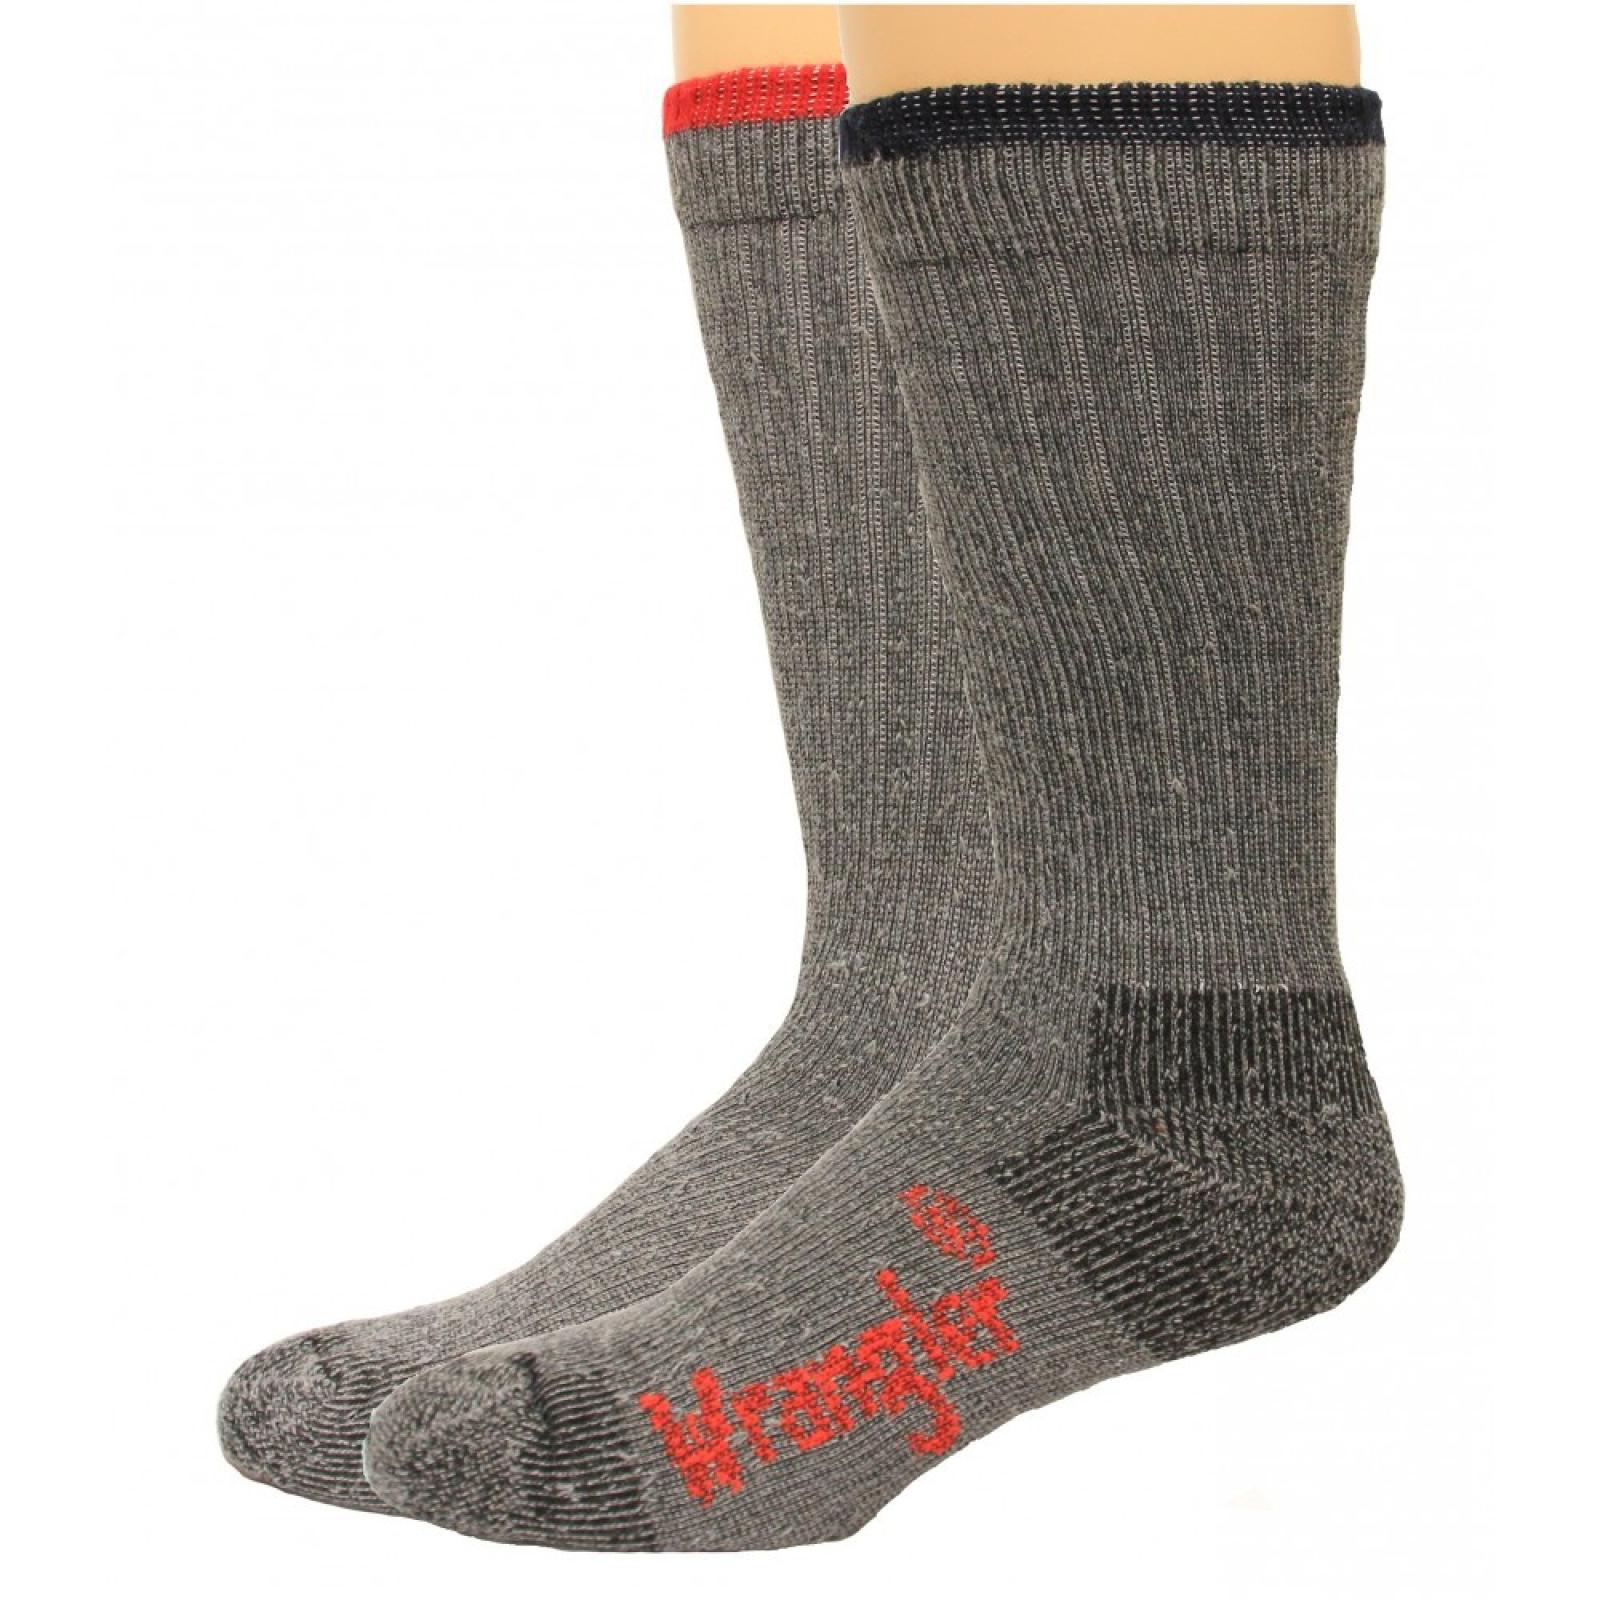 Wrangler Men's Pro Gear Wool Blend Socks